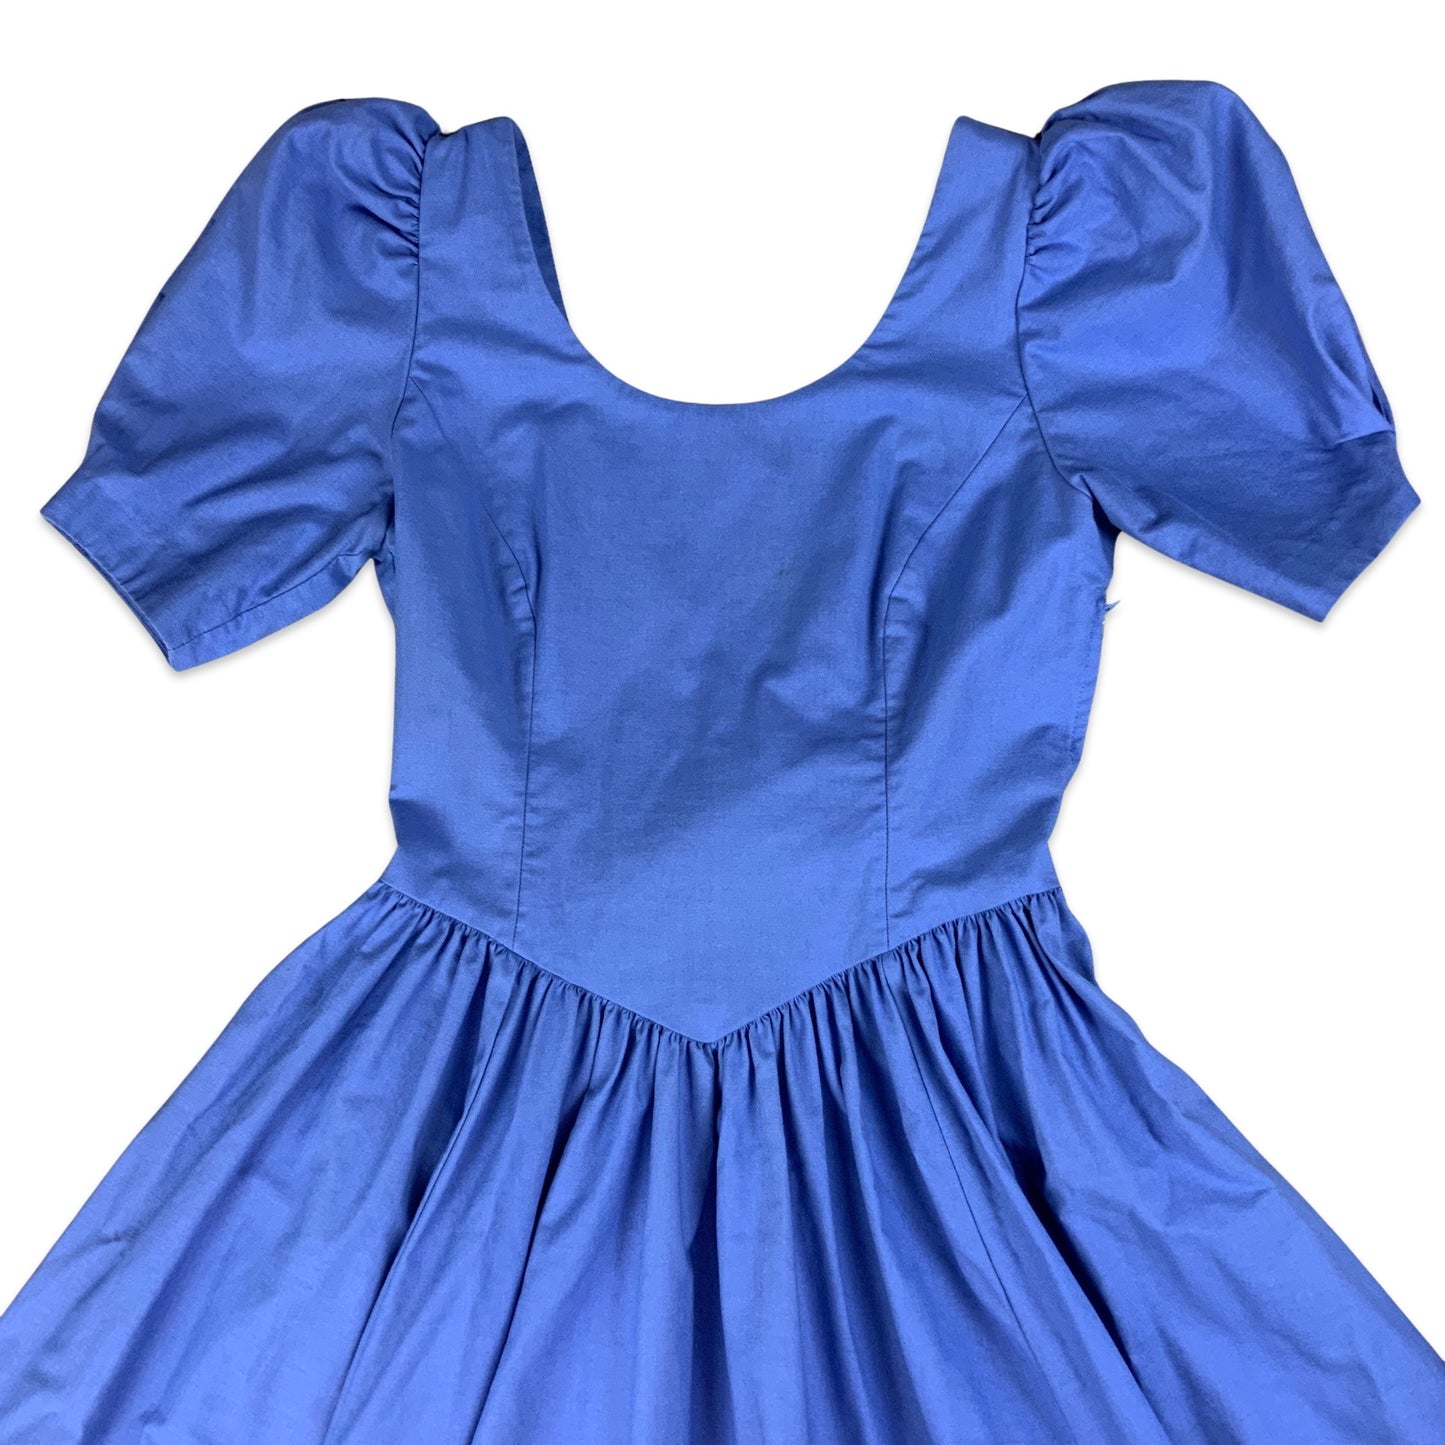 Vintage 80s Laura Ashley Blue Bouffant Party Dress 8 10